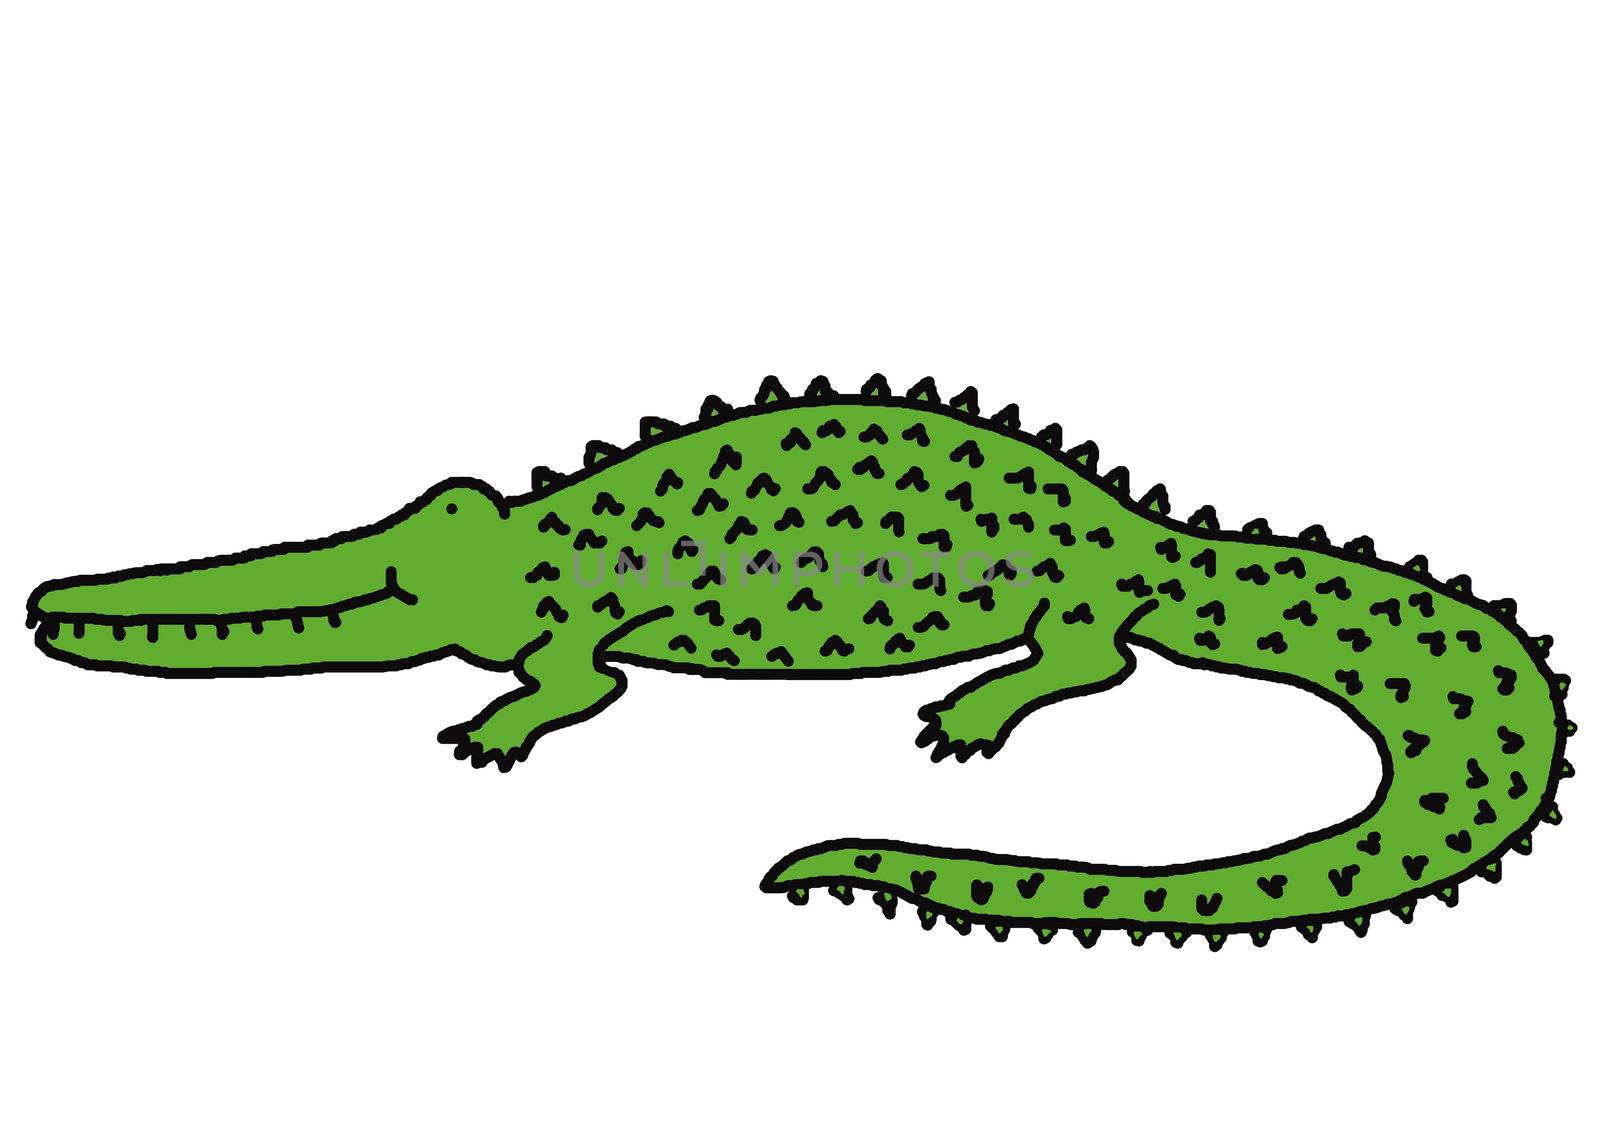 Smiling crocodile by Yaurinko